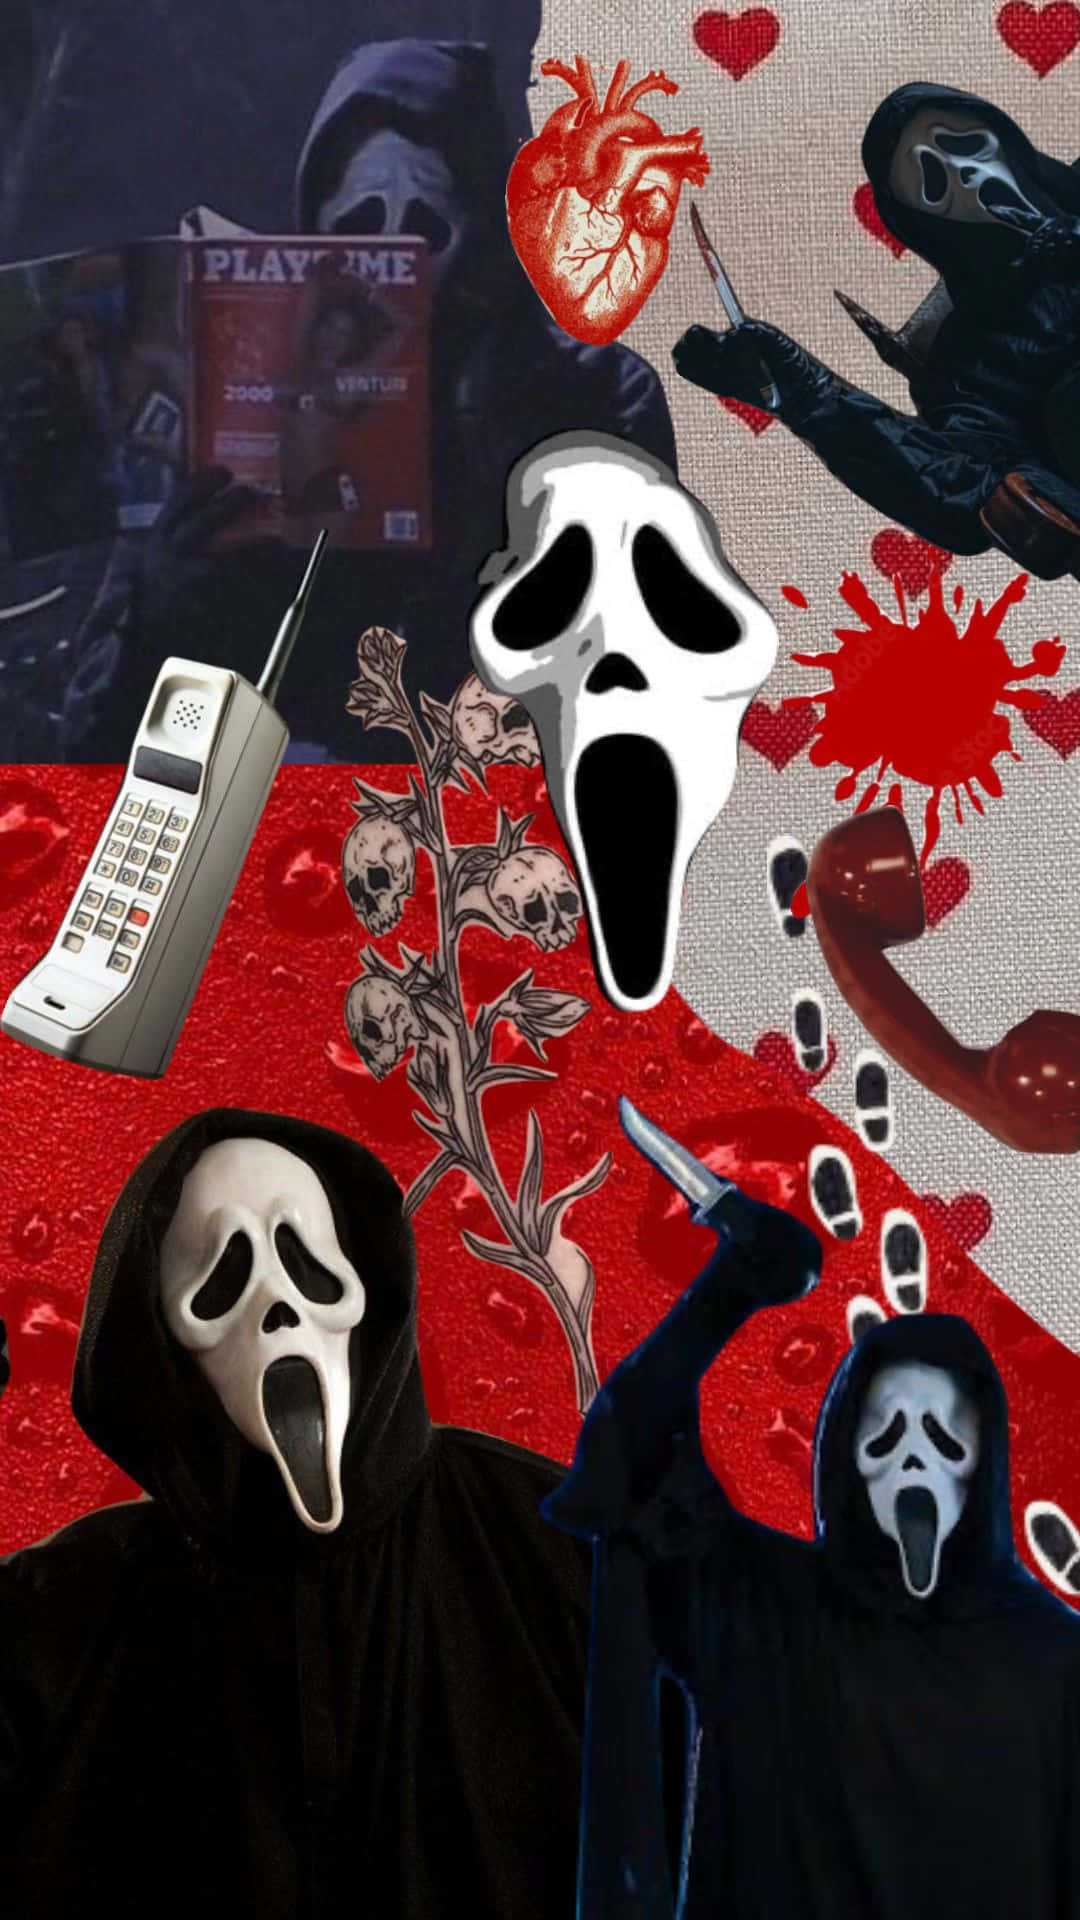 Scream Movie Collage Aesthetic Wallpaper